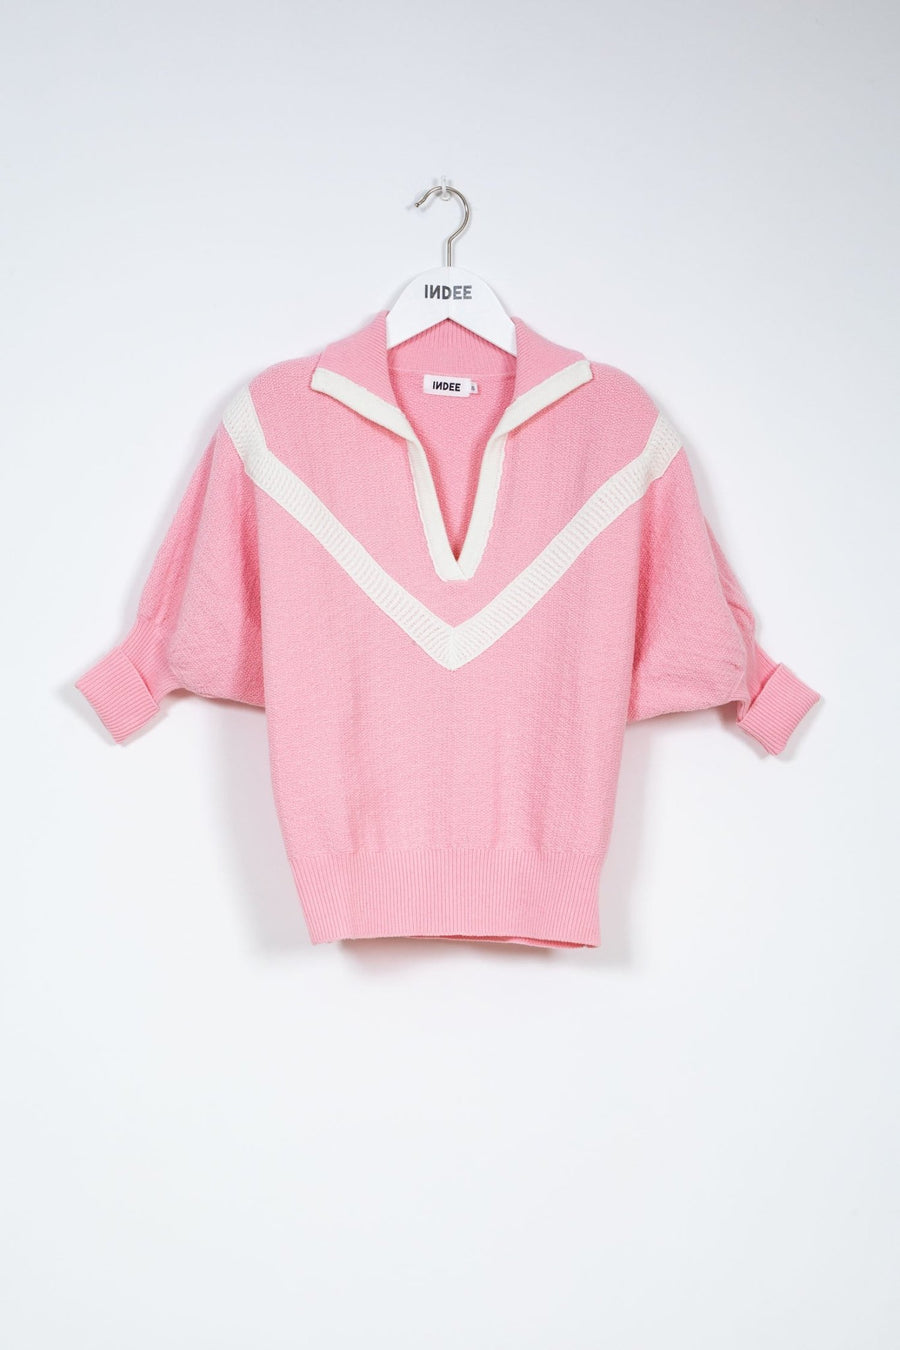 MultiColor CN Sweatshirt - Candy Pink - Posh New York